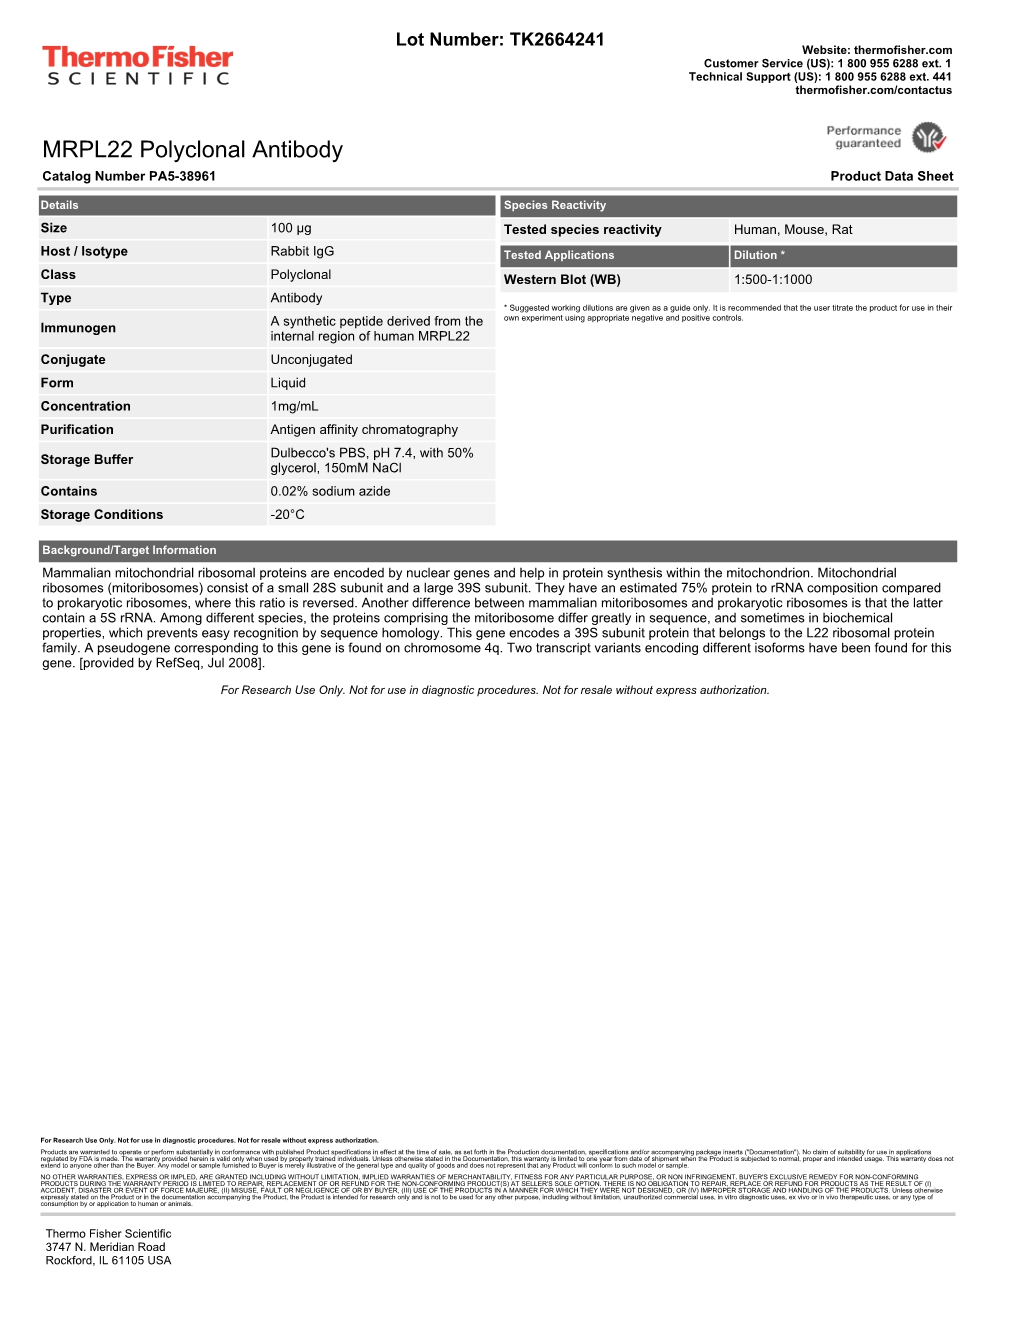 MRPL22 Polyclonal Antibody Catalog Number PA5-38961 Product Data Sheet